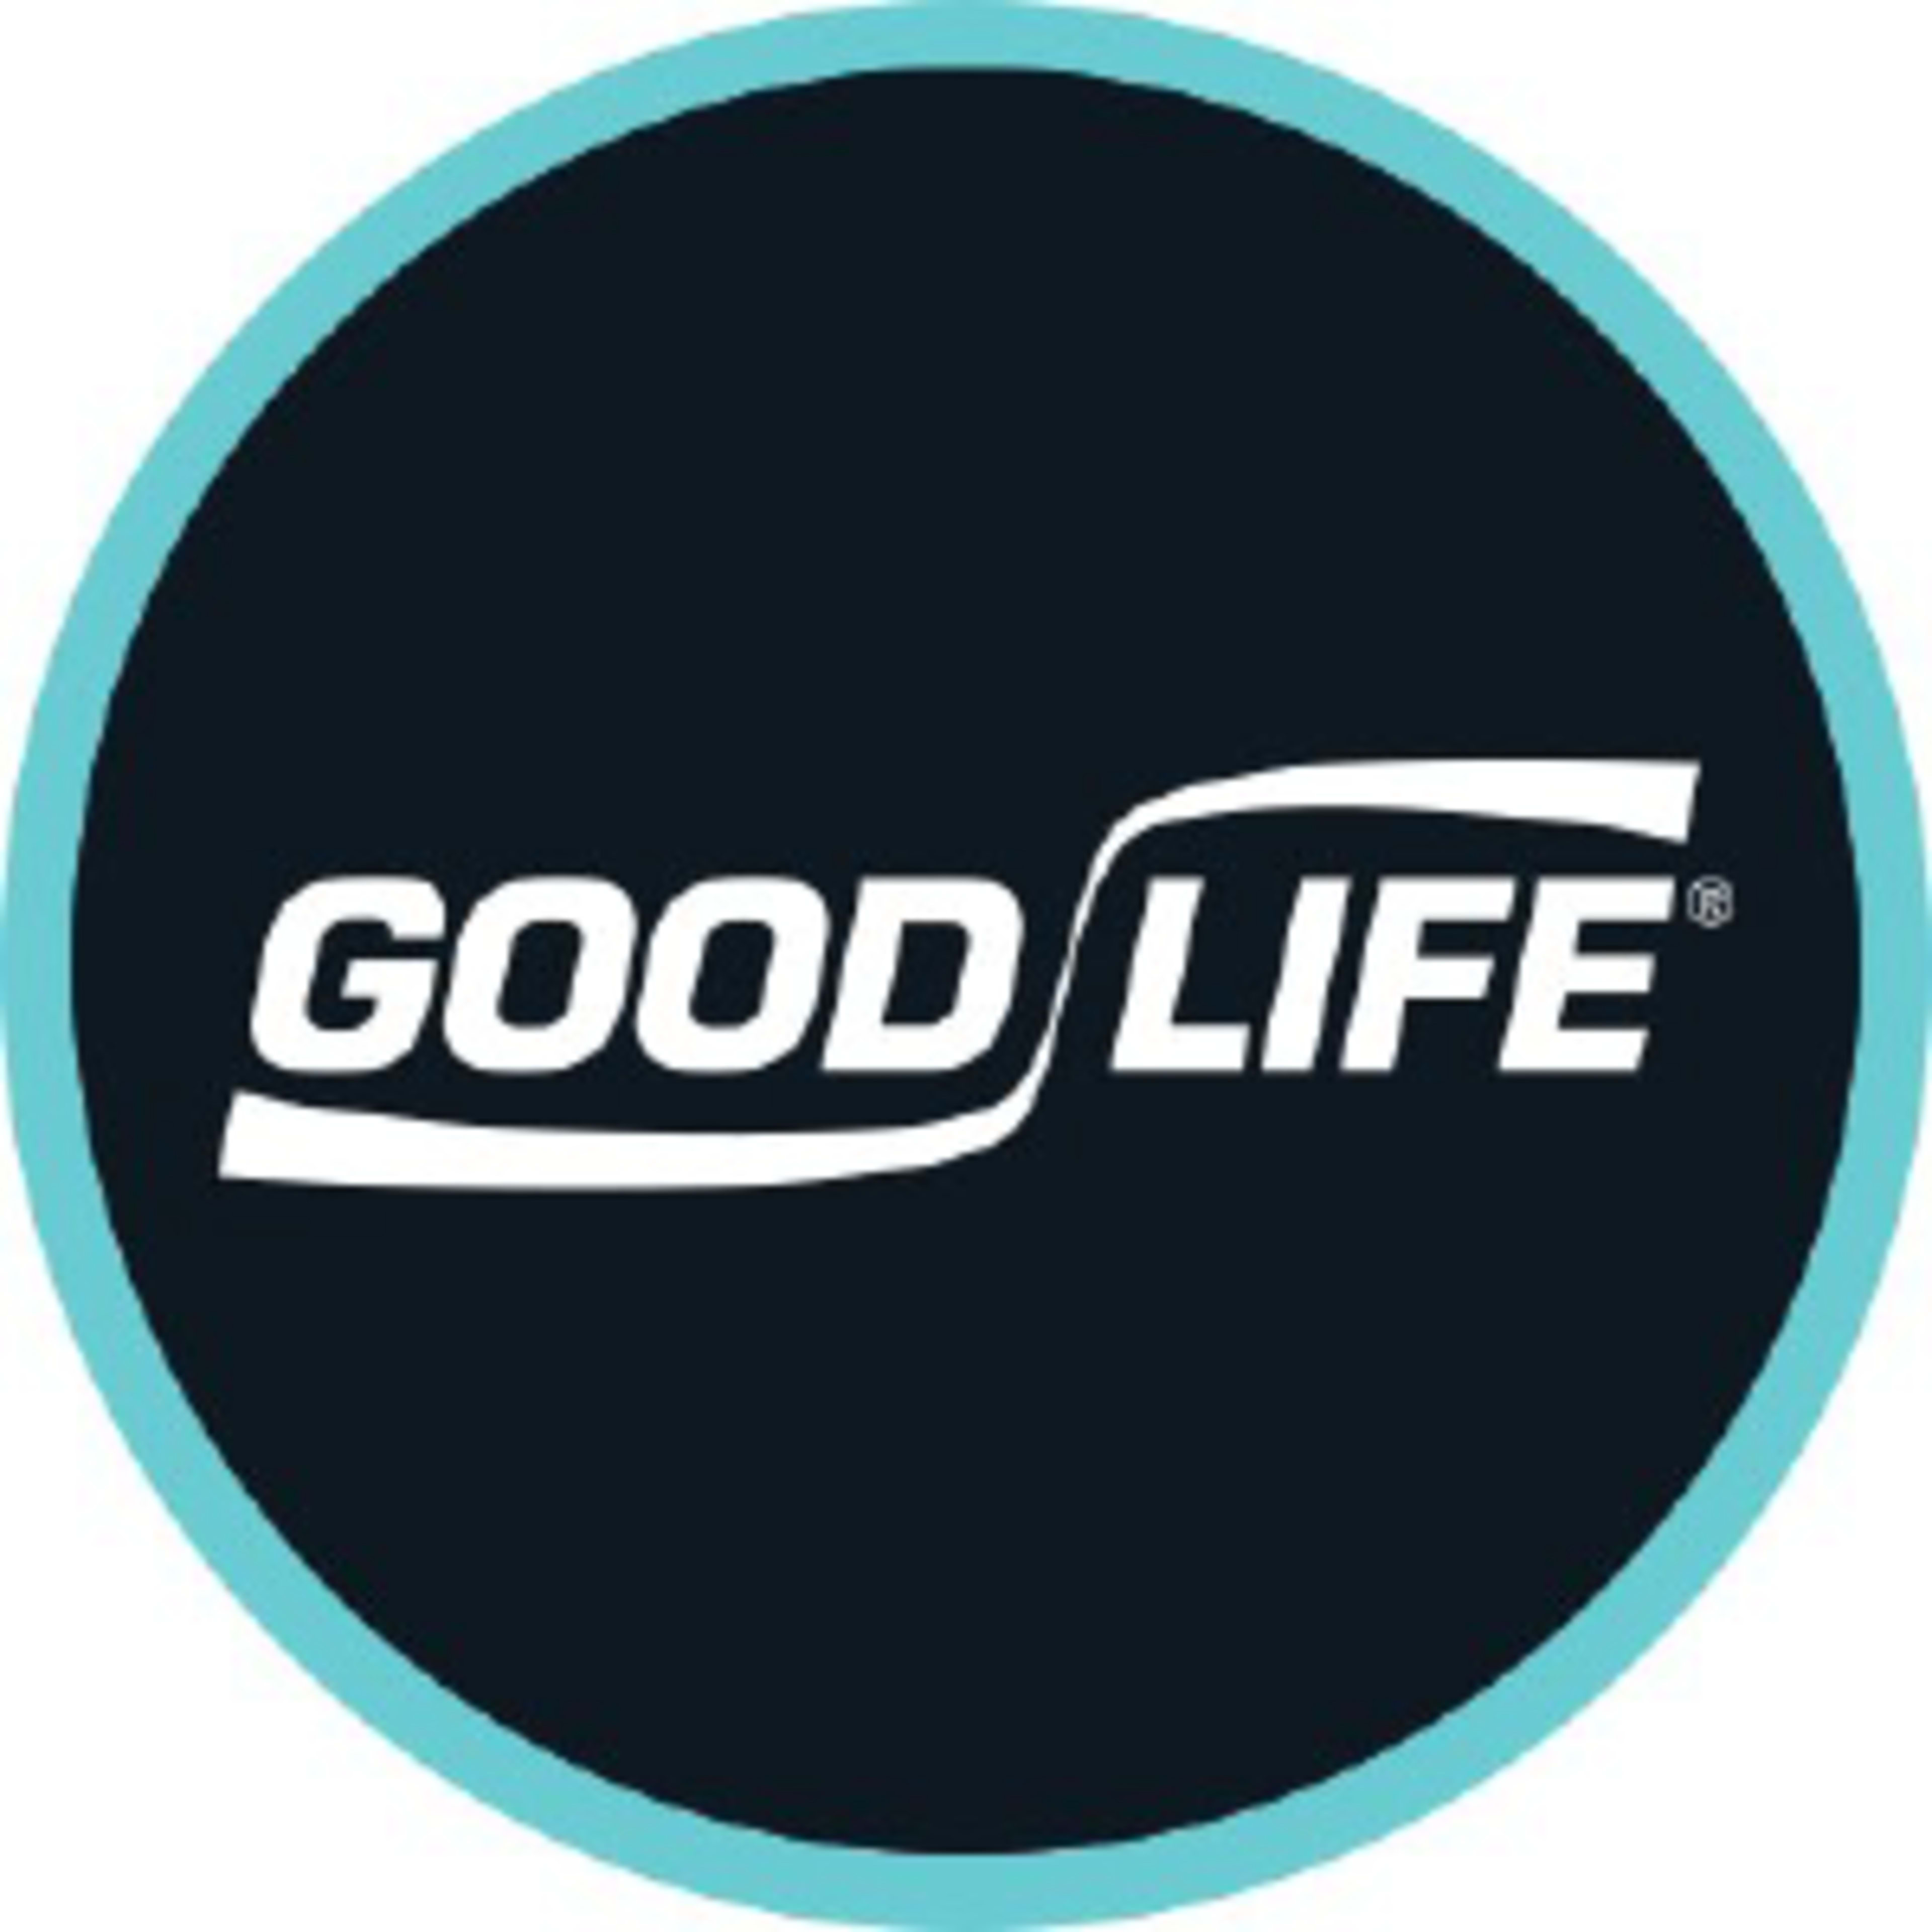 Good Life, Inc.Code